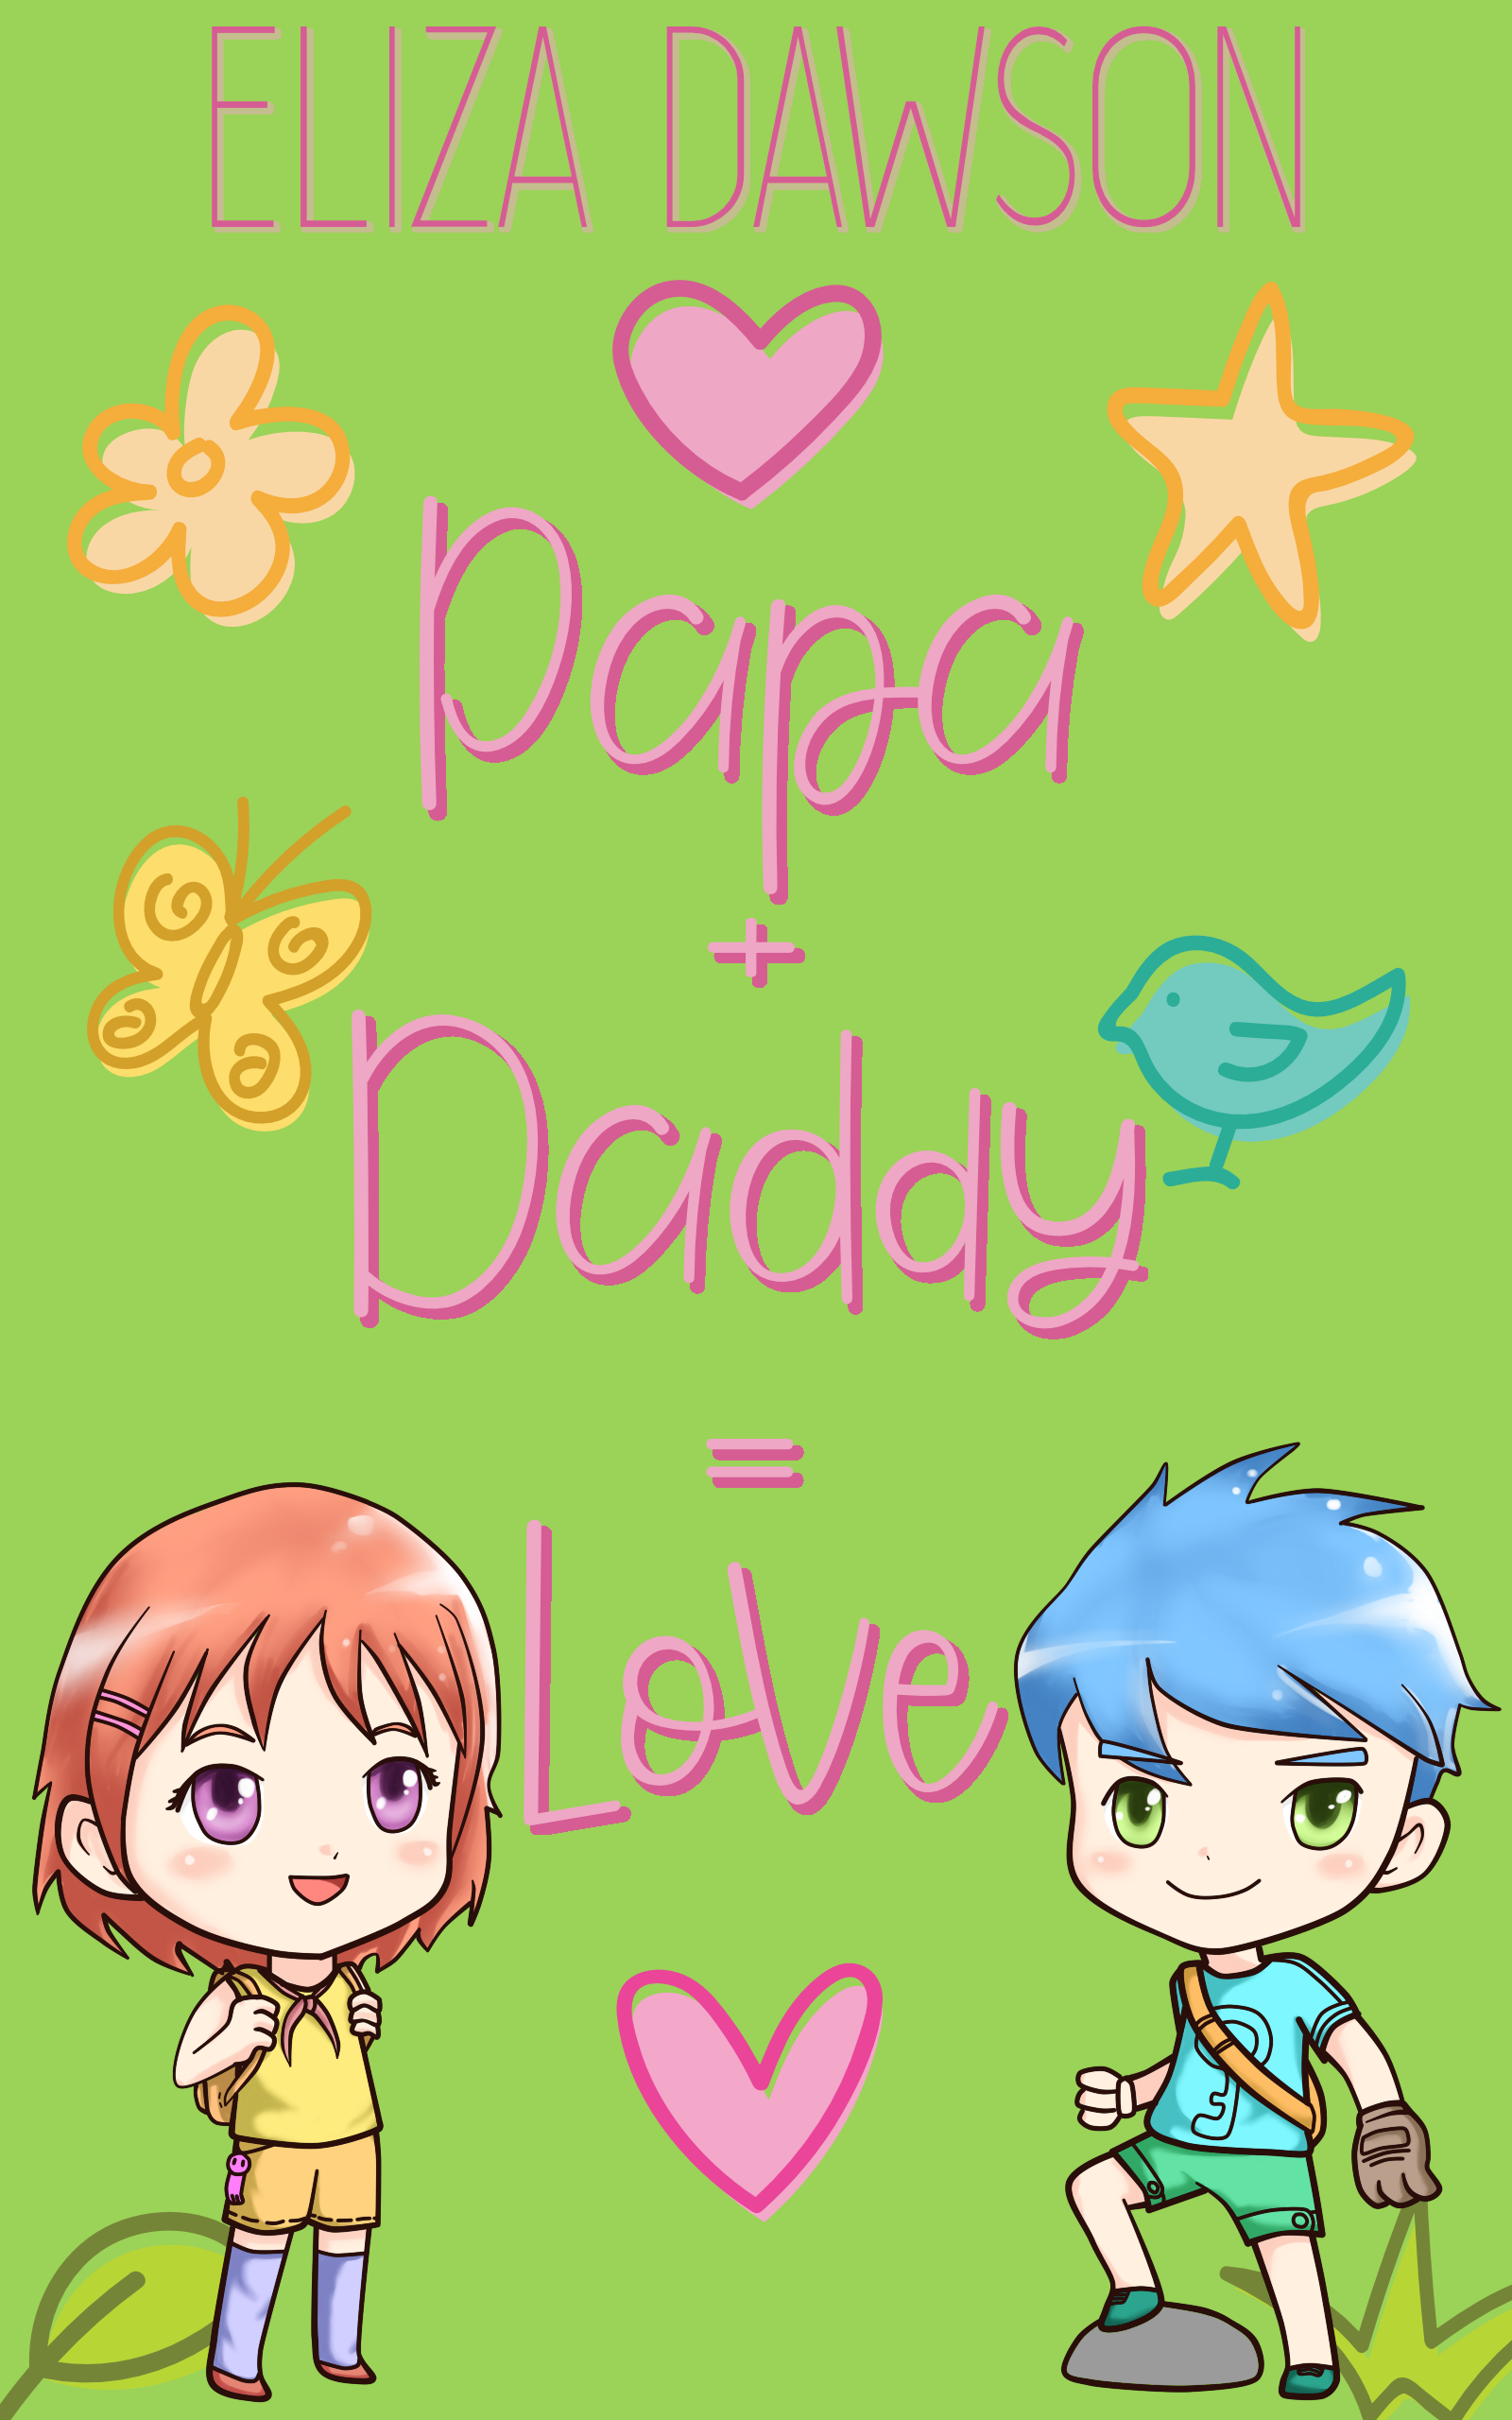 Papa + Daddy = Love